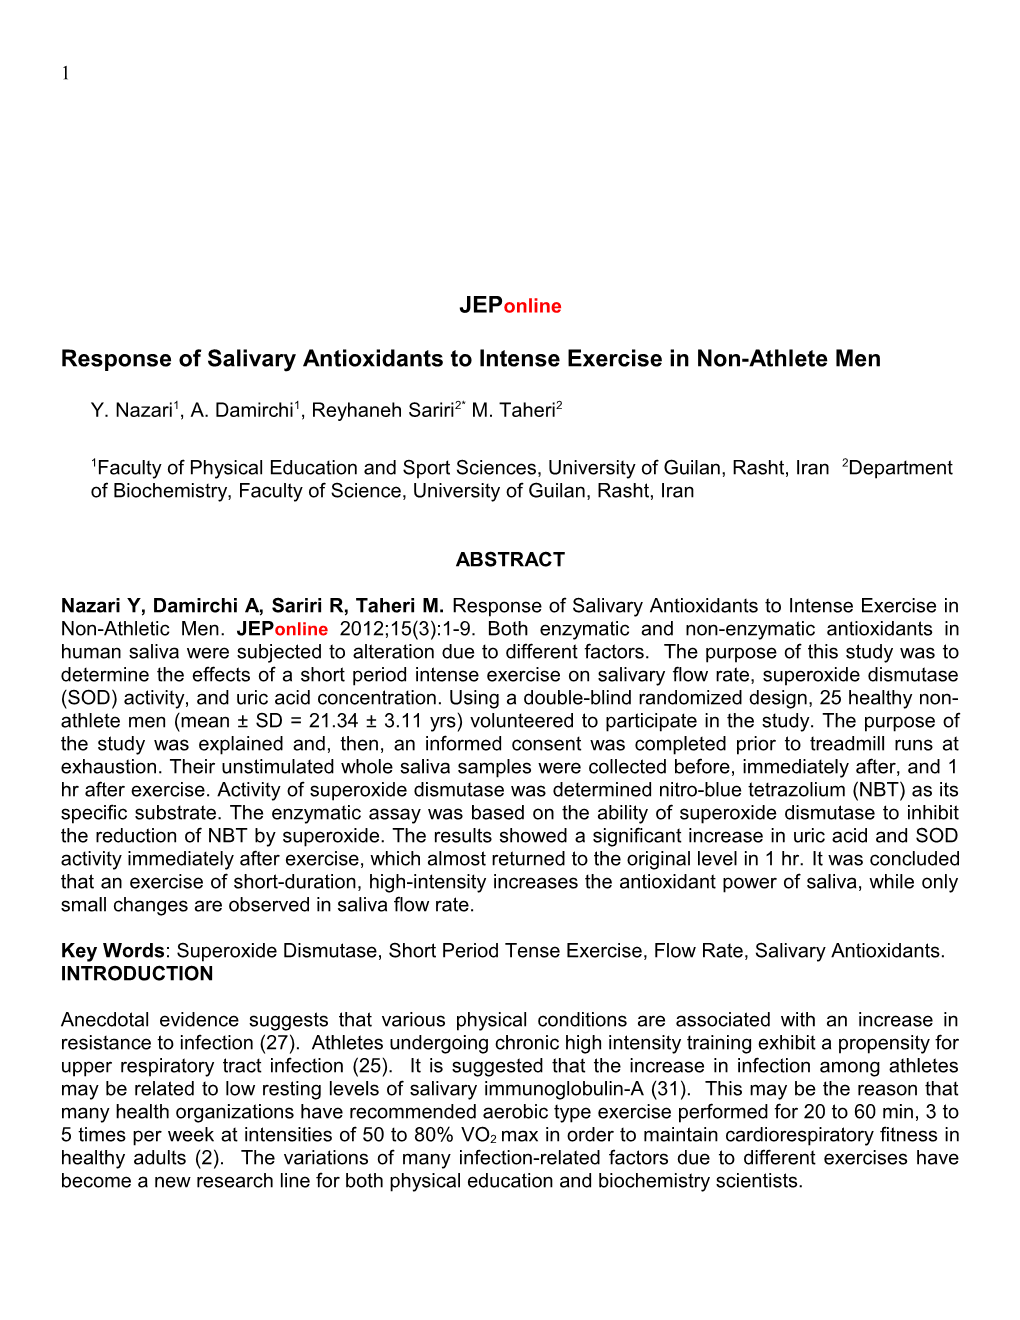 Response of Salivary Antioxidants to Intense Exercise in Non-Athlete Men